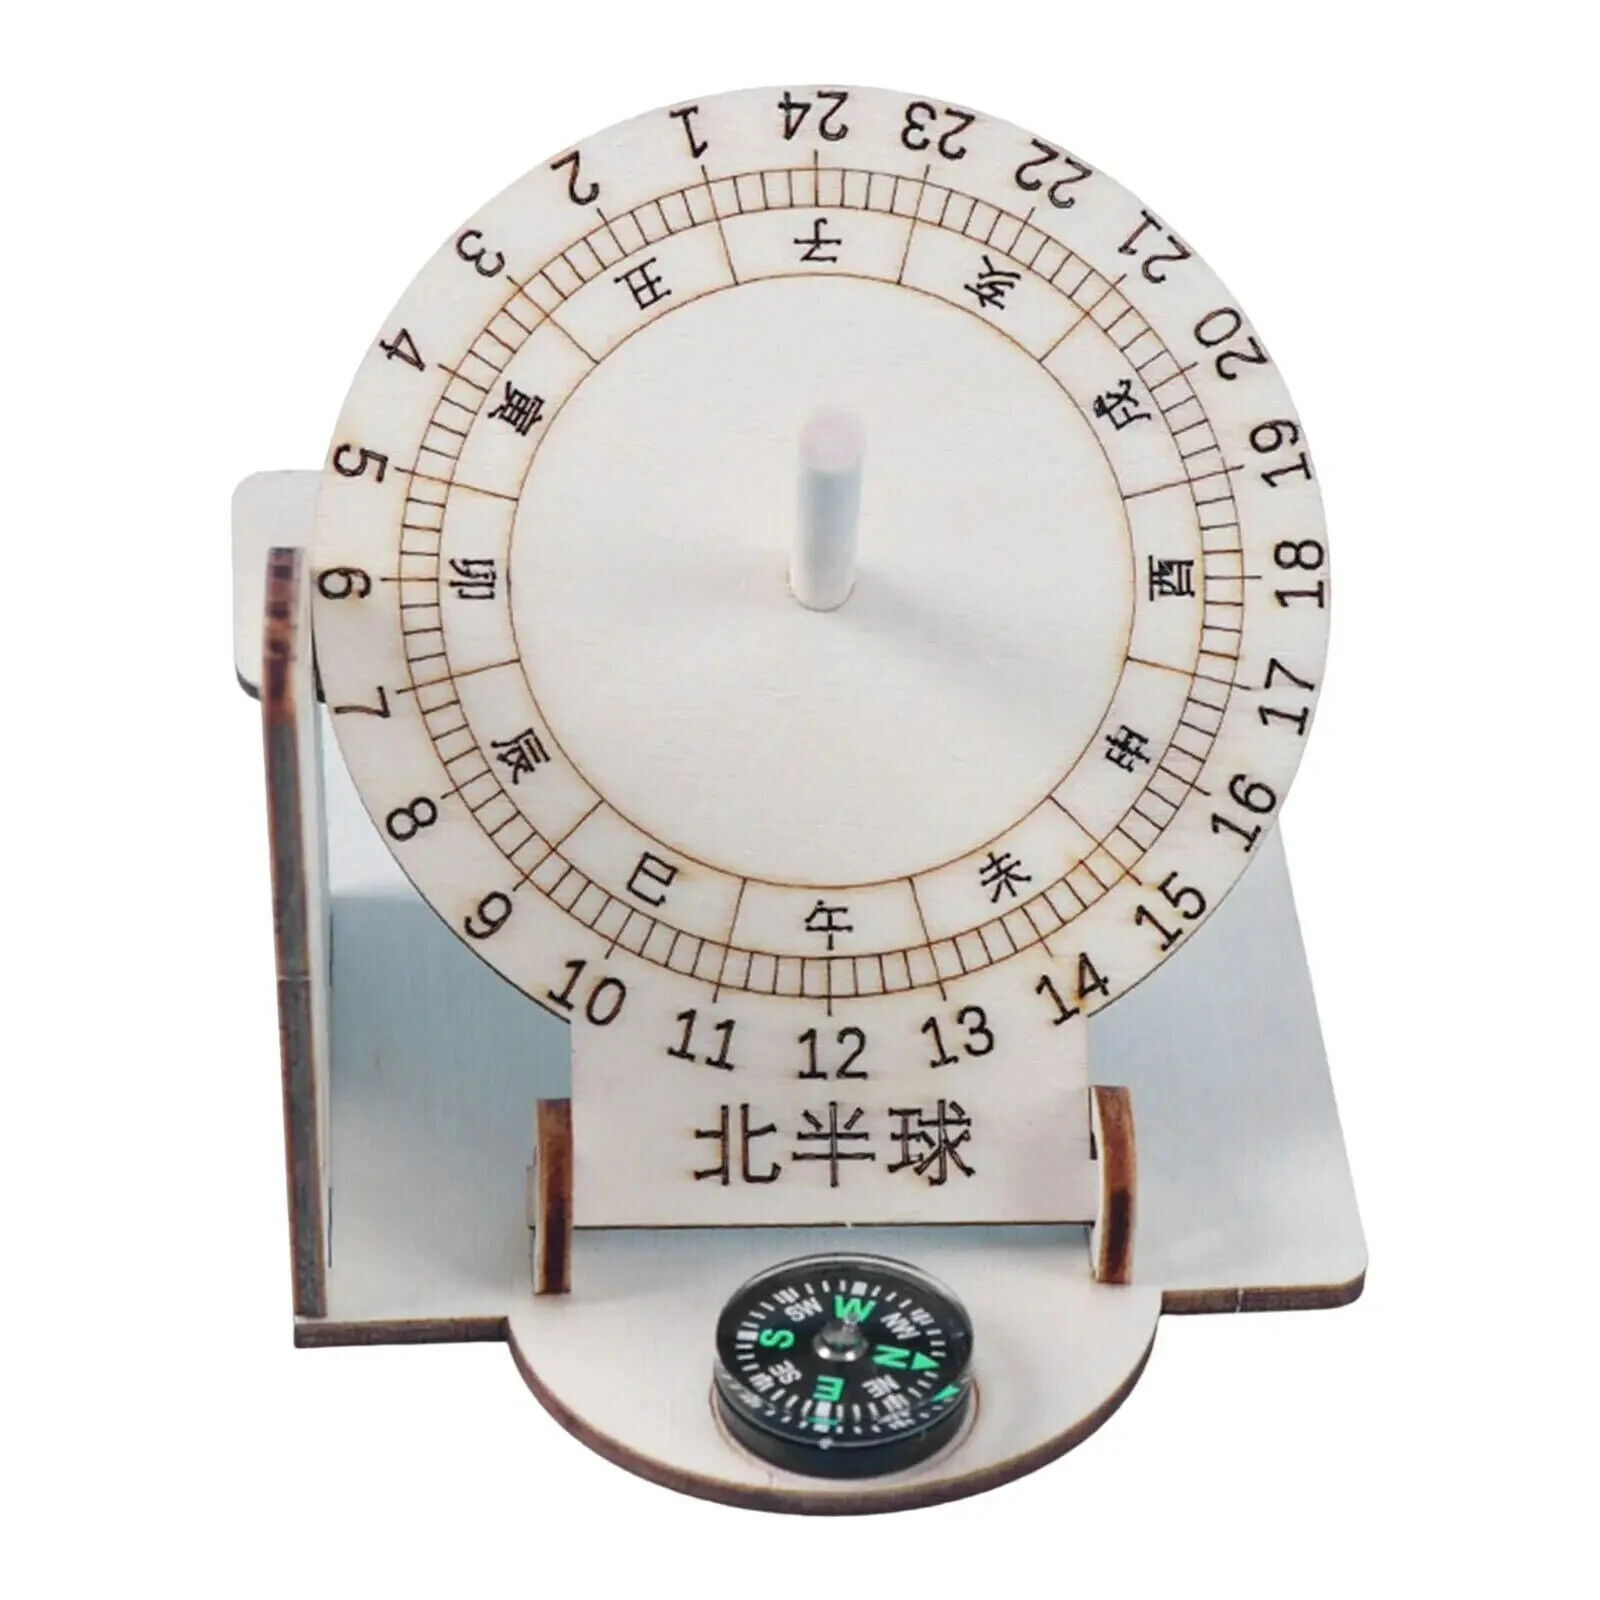 Equatorial Sundial Clock Wooden Scientific Model DIY Teaching Aid Educational To